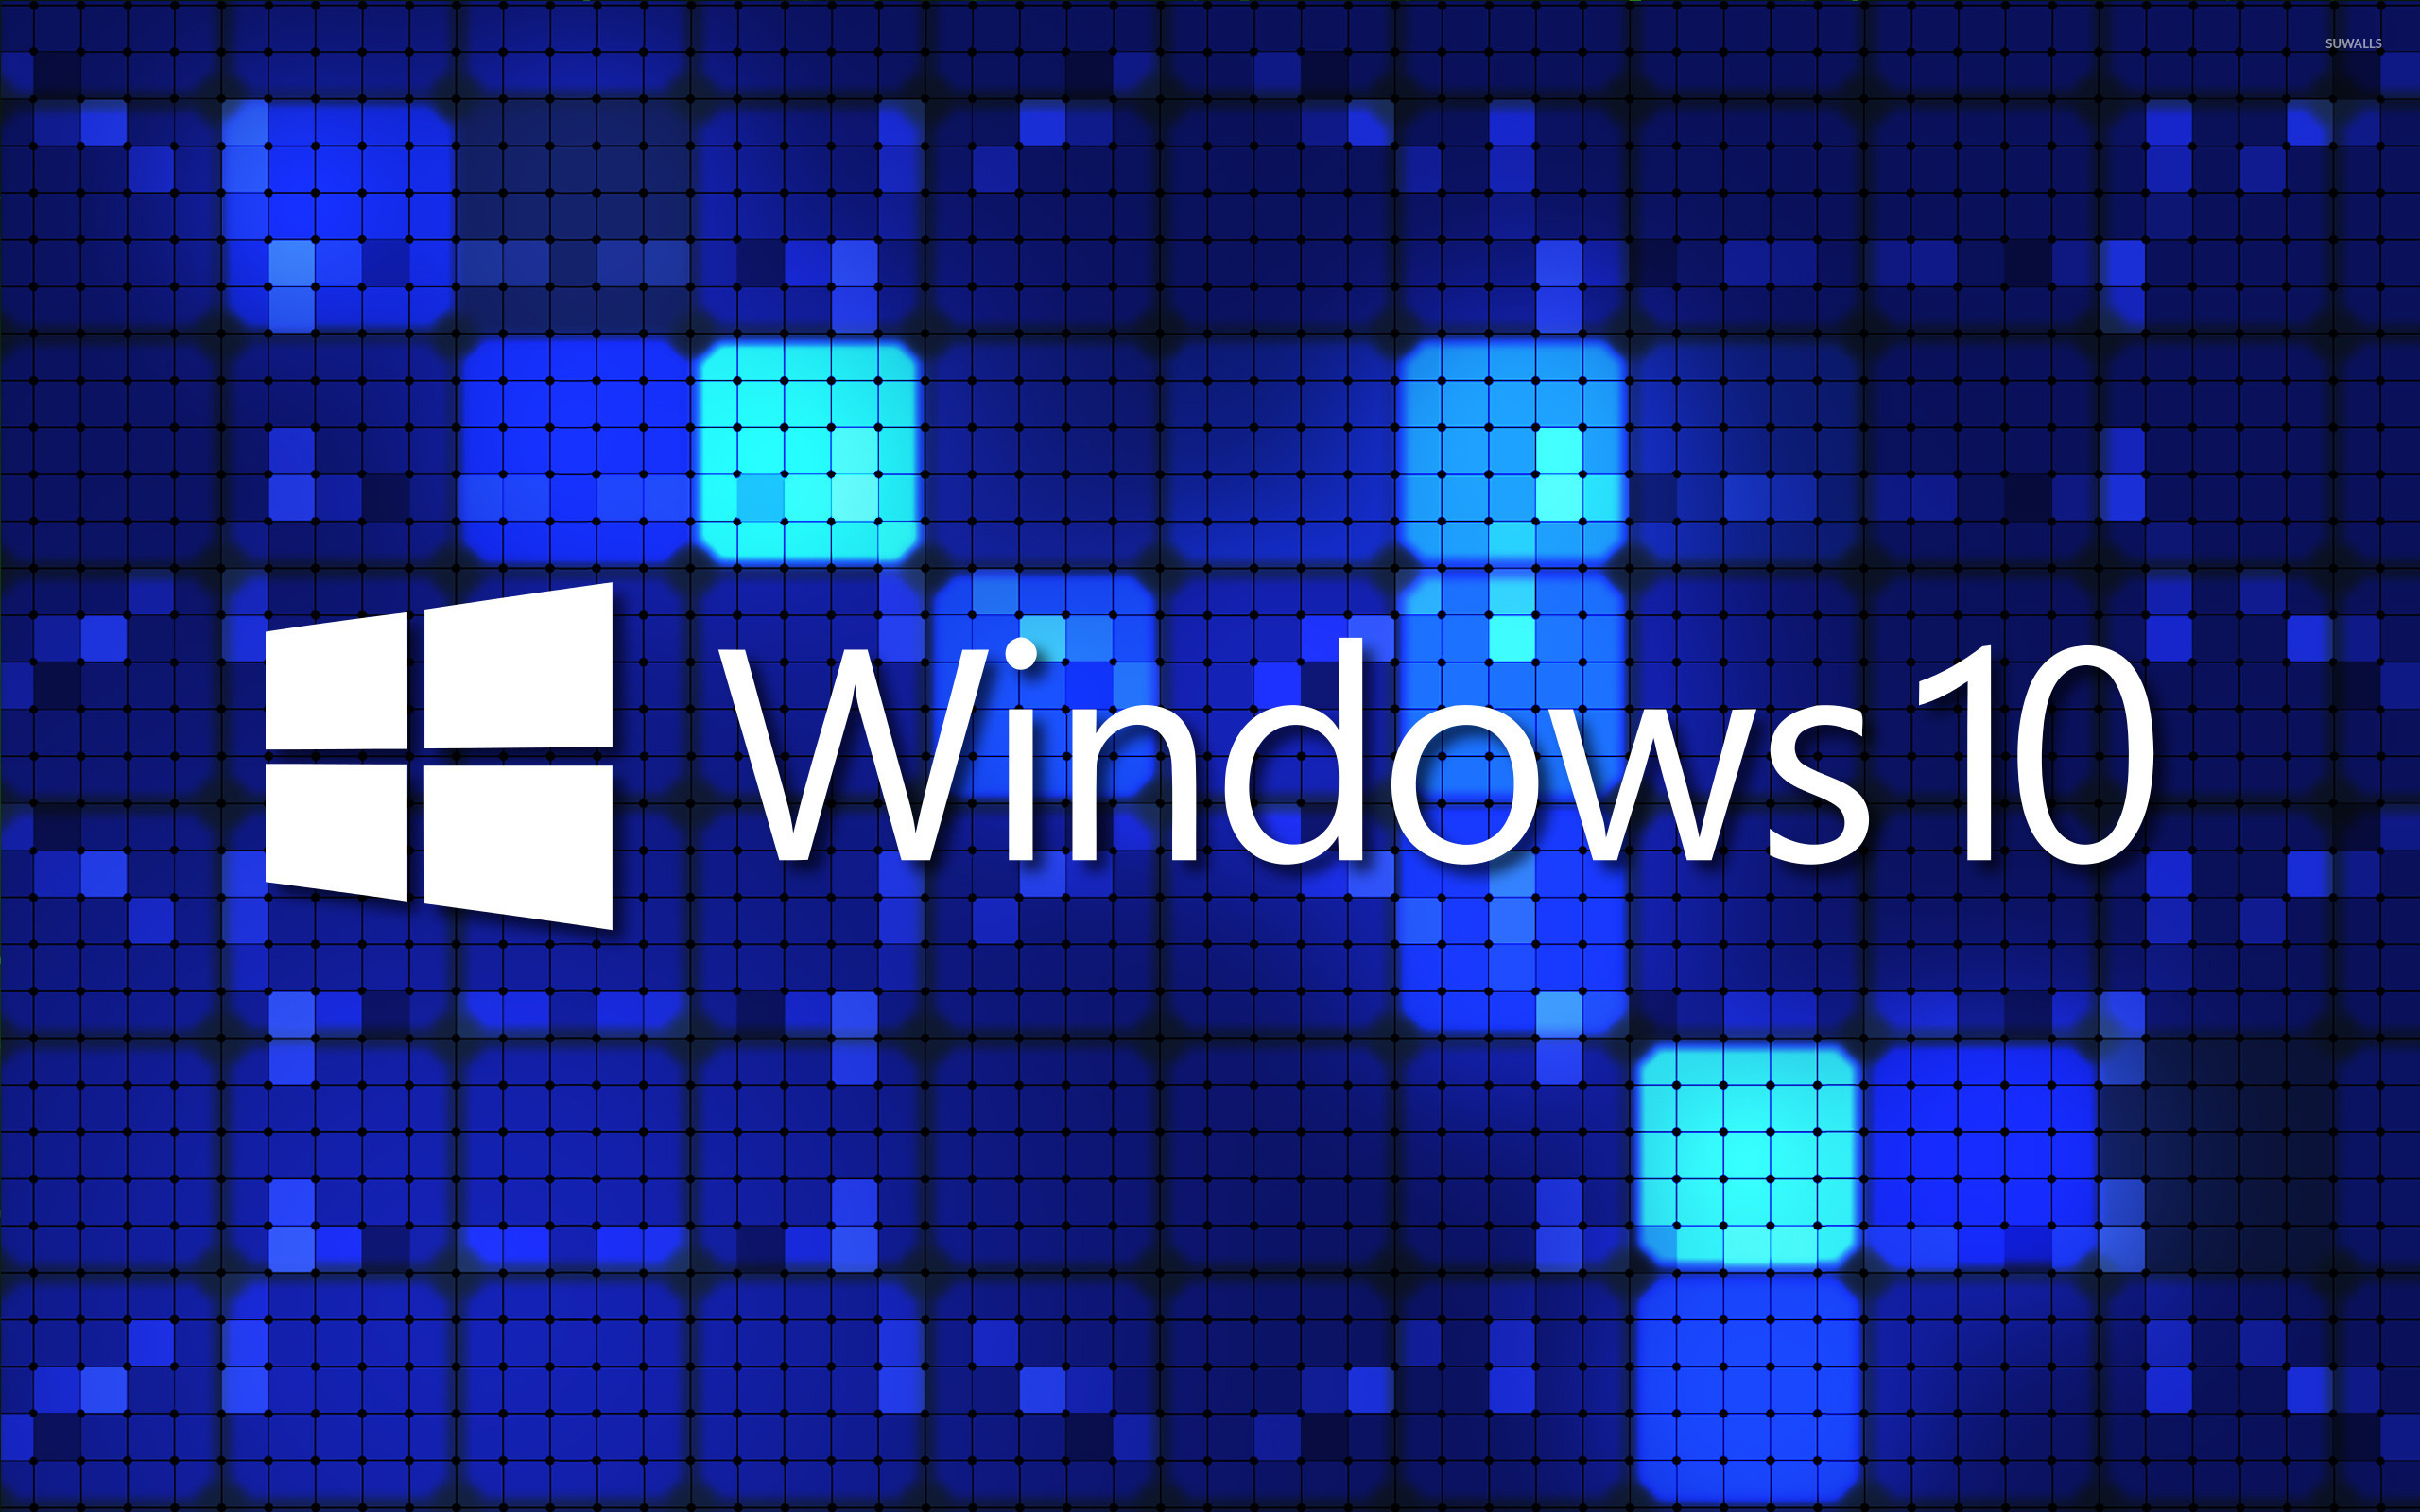 Windows 10 White Text Logo On Blue Squares Wallpaper Computer